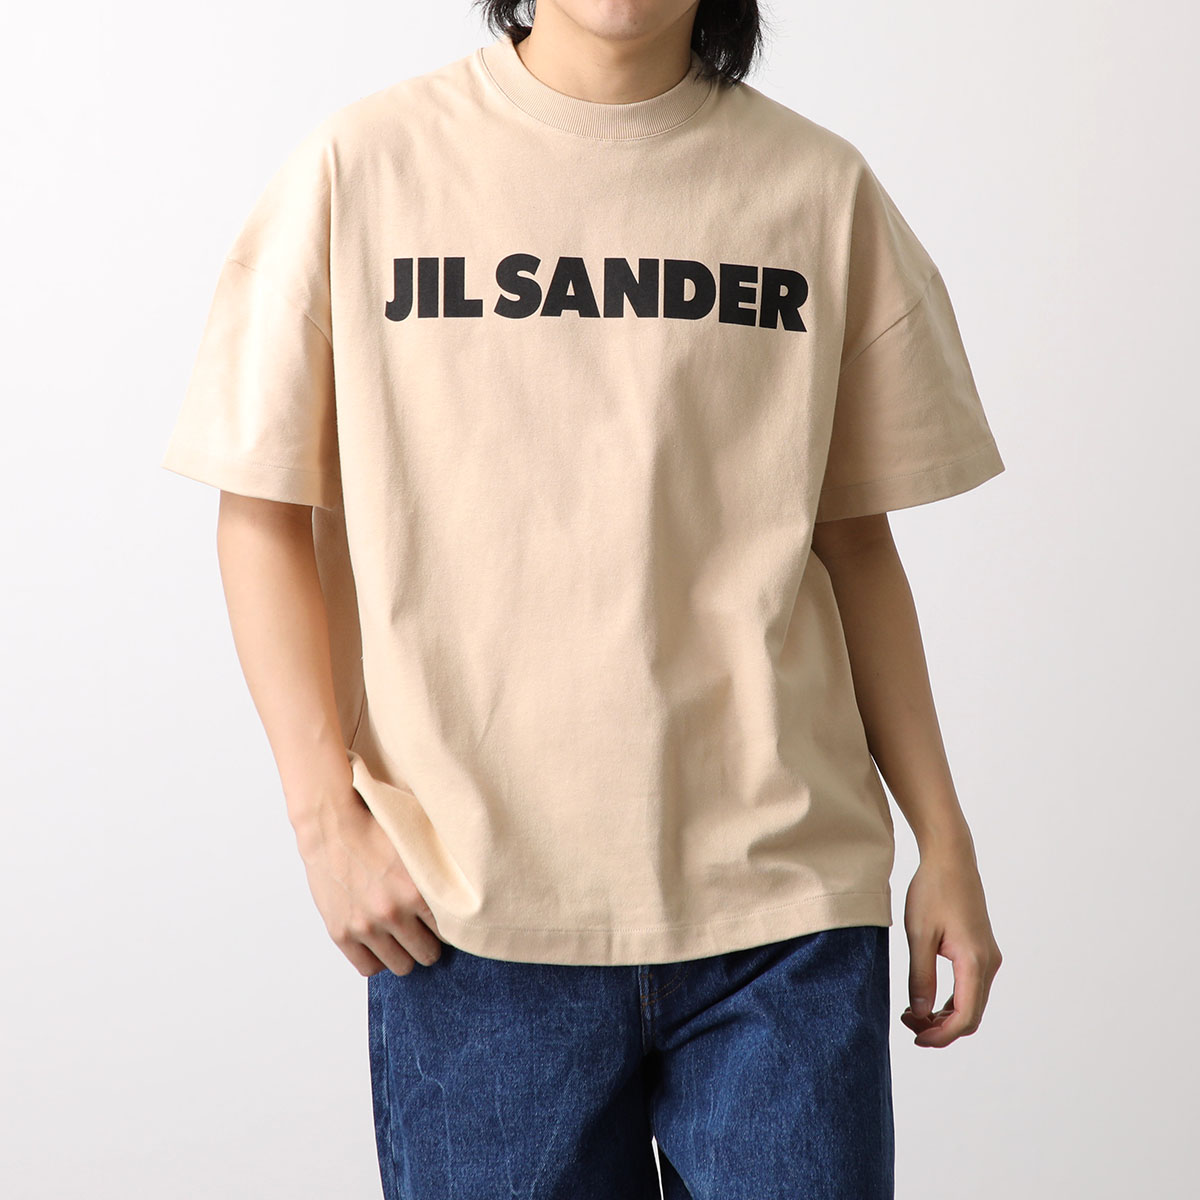 JIL SANDER ジルサンダー Tシャツ J21GC0001 J20215 メンズ 半袖 